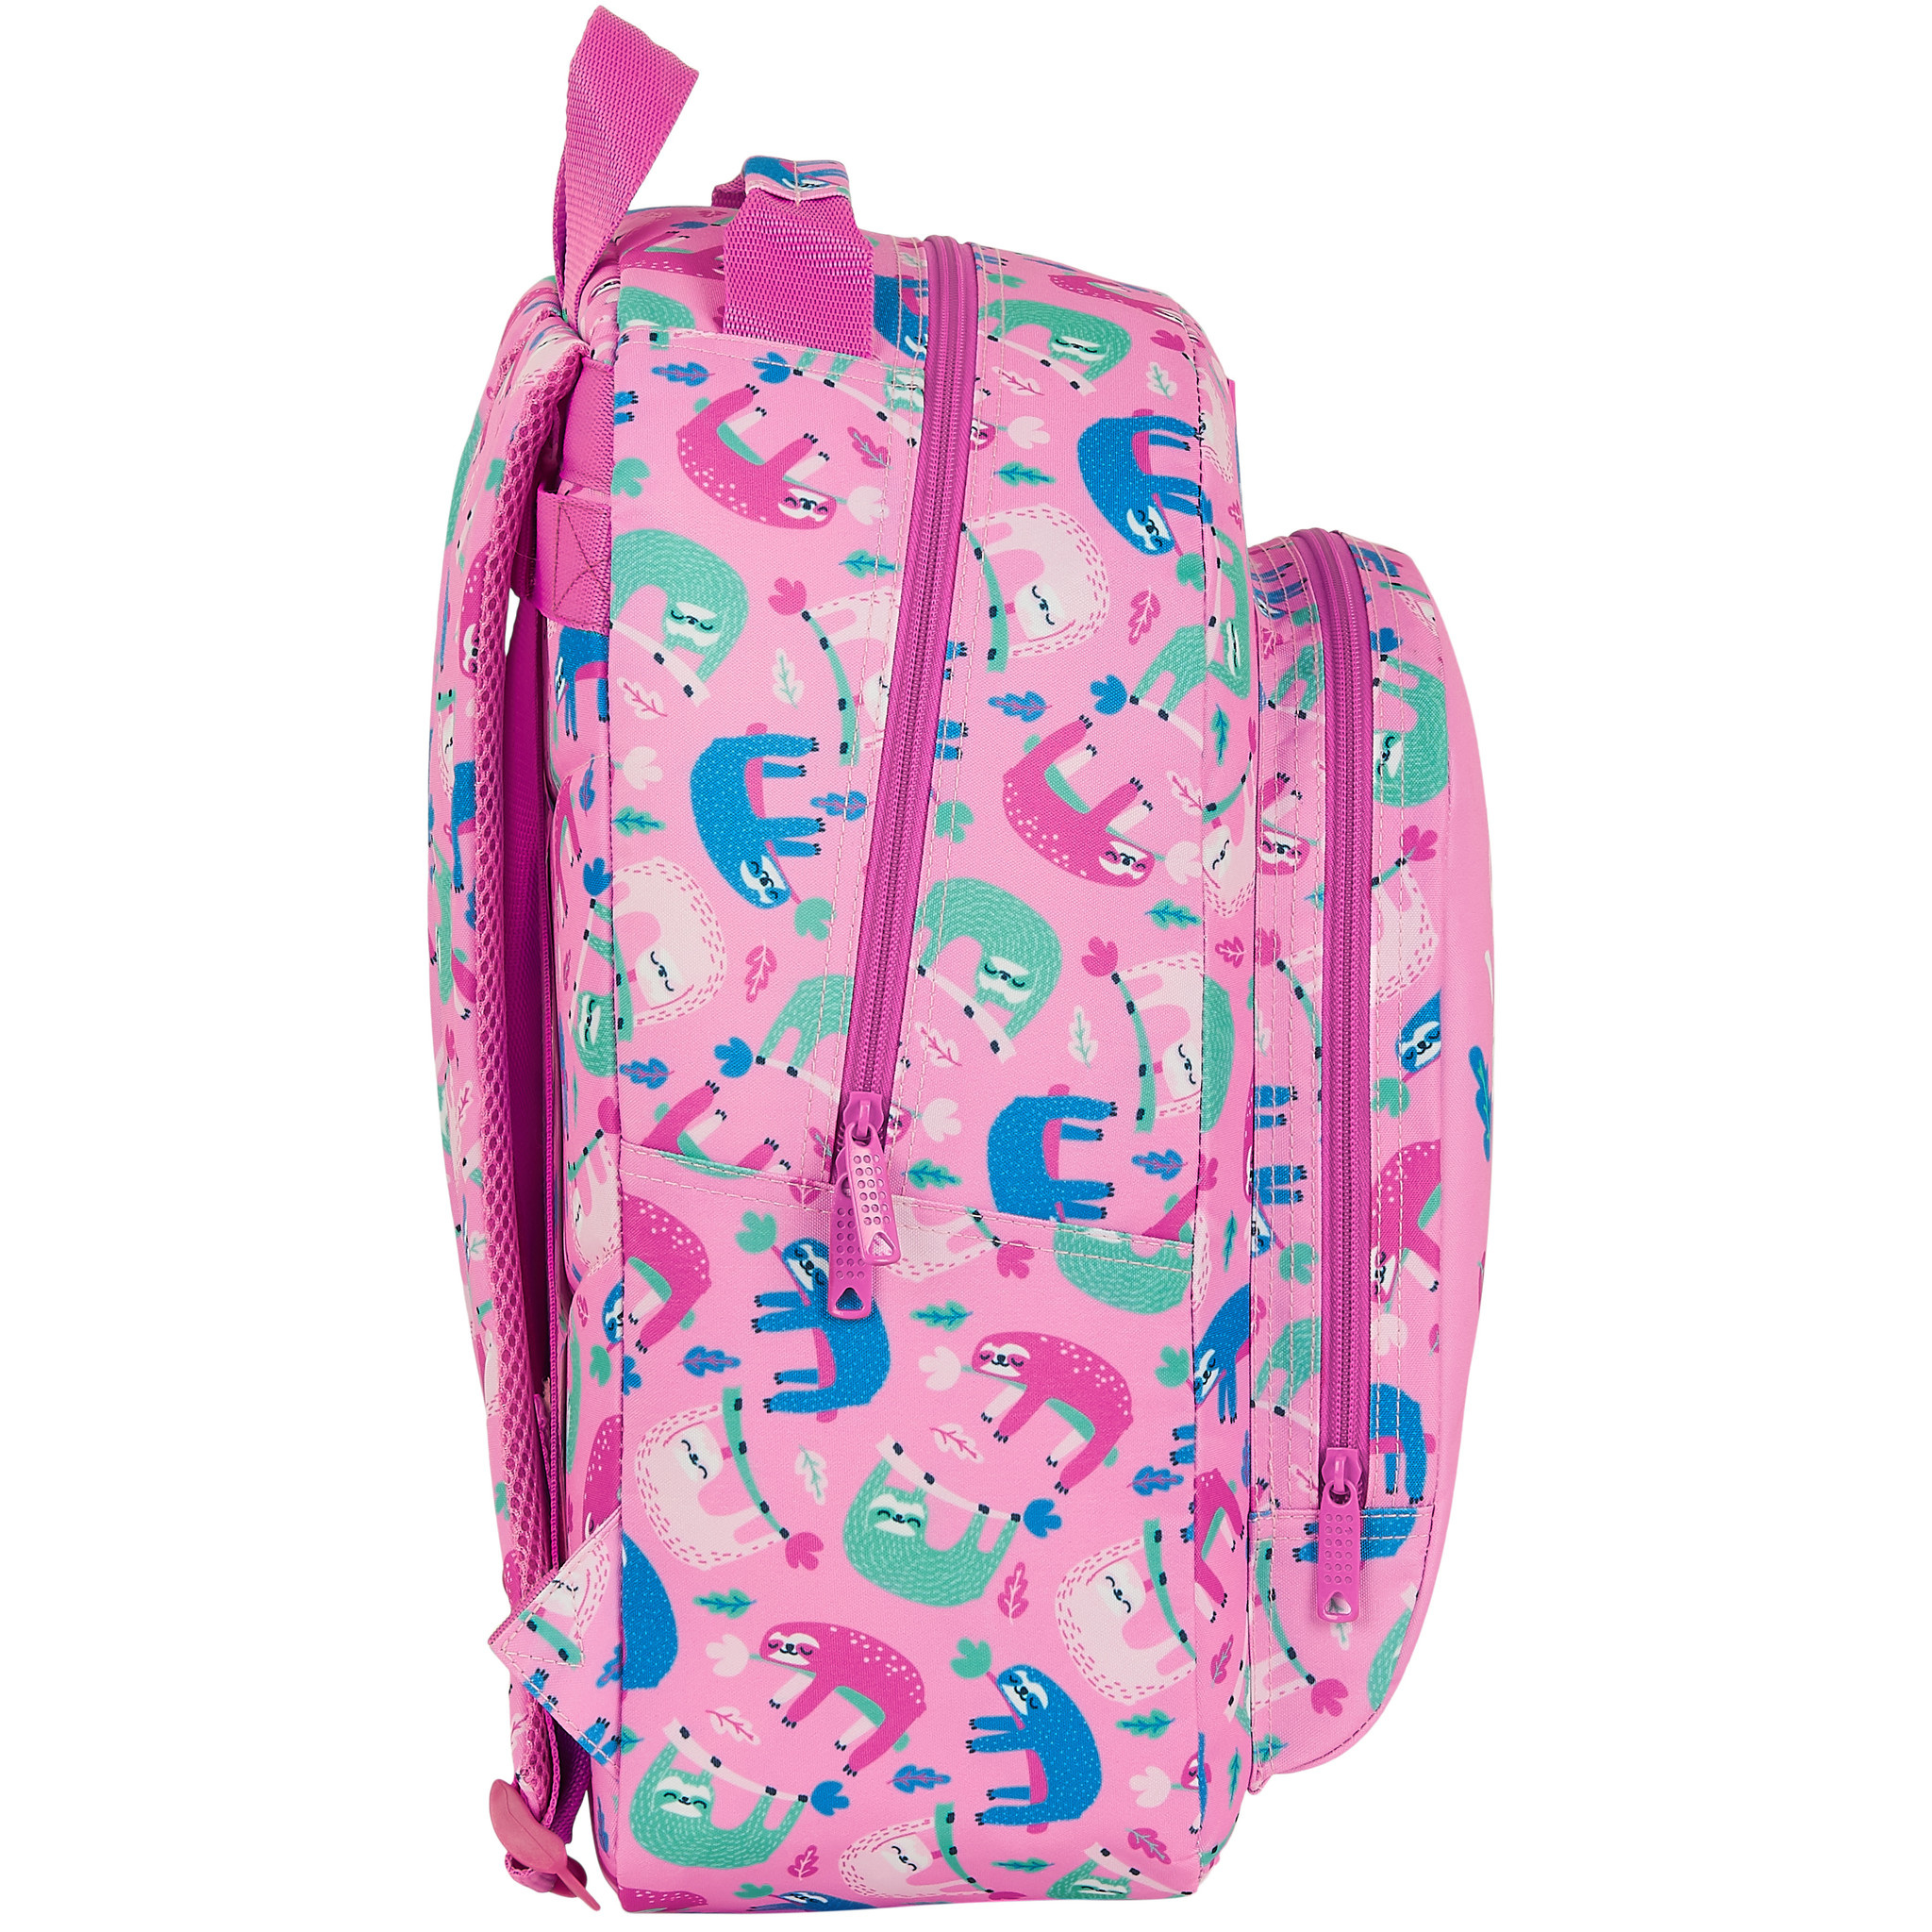 BlackFit8 Sloth Backpack - 42 x 33 x 14 cm - Pink